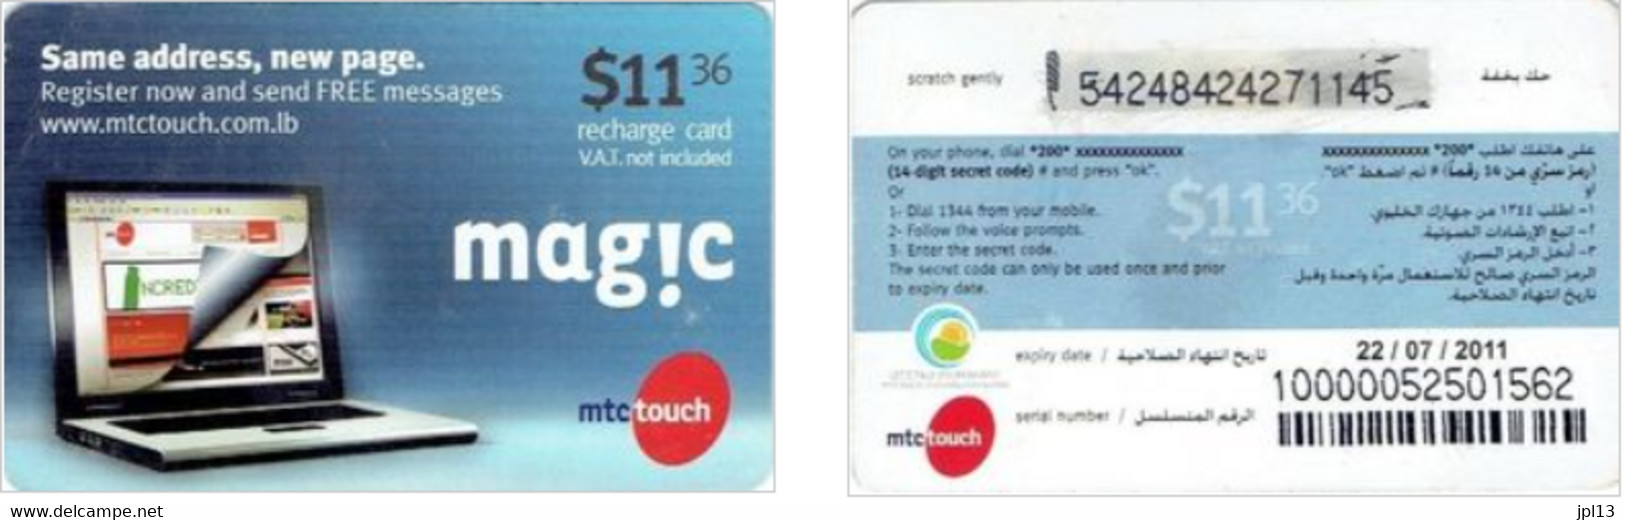 Recharge GSM - Liban - MTC Touch - Magic - Computer $11,36, Exp. 22/09/2011 - Liban